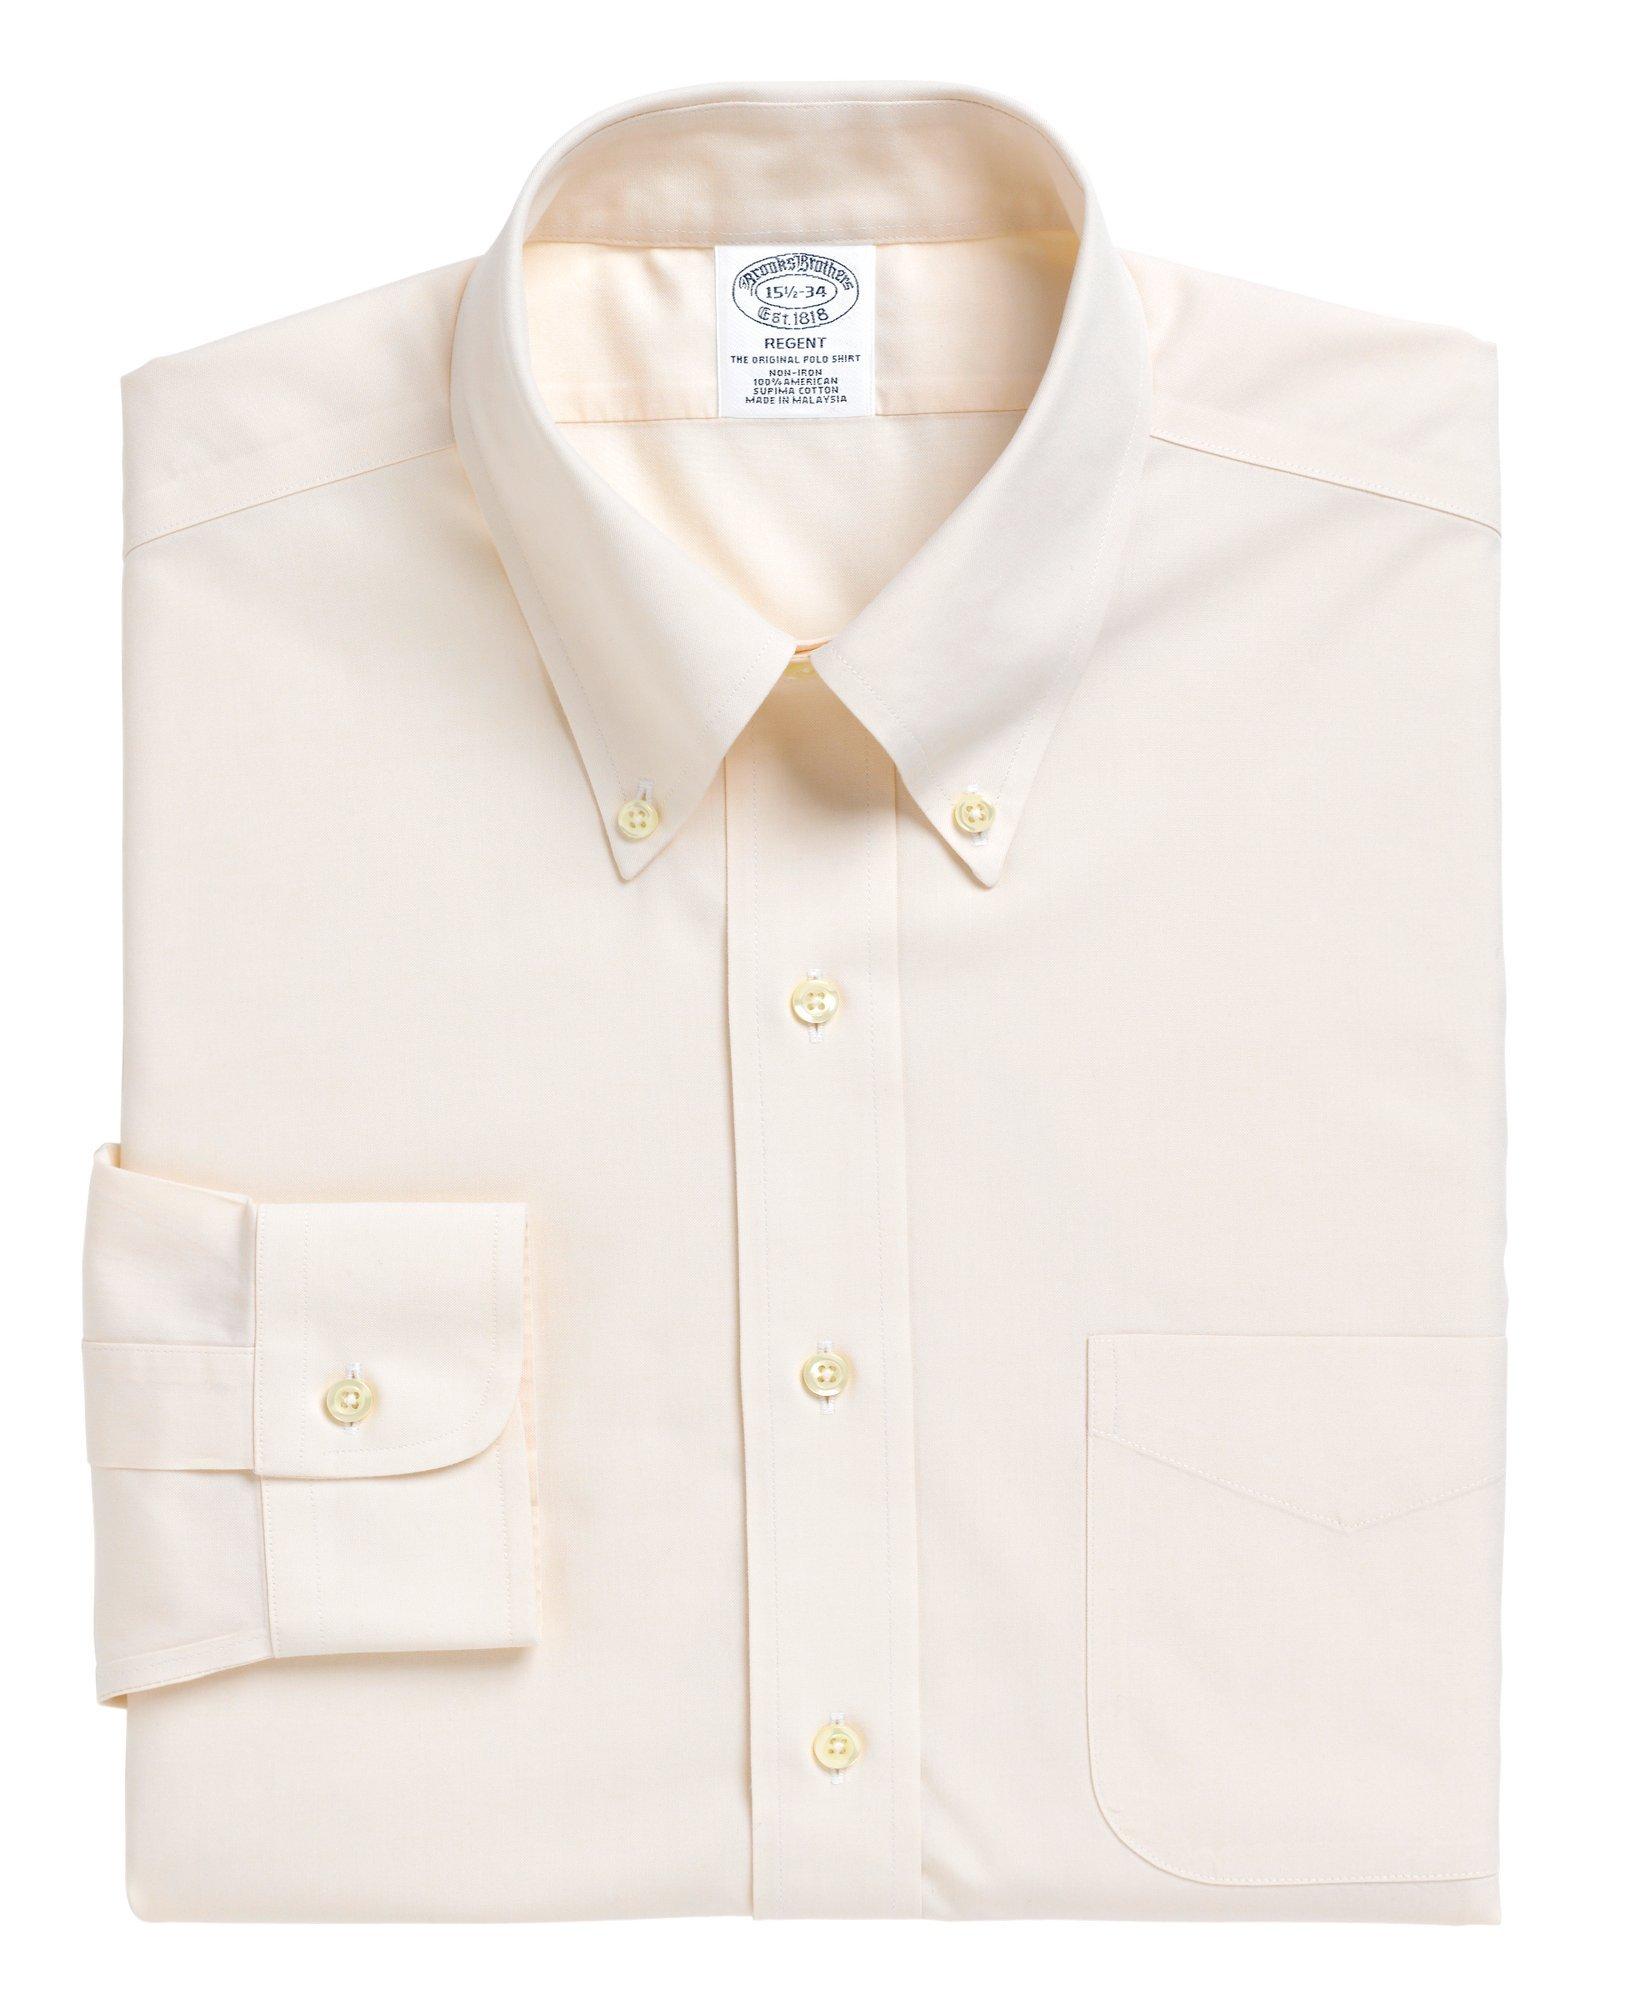 Graphic Tshirts Men Button Down Collar Long Sleeve Vest Gentleman Classic  Shirt for Men Dark Blue at  Men's Clothing store